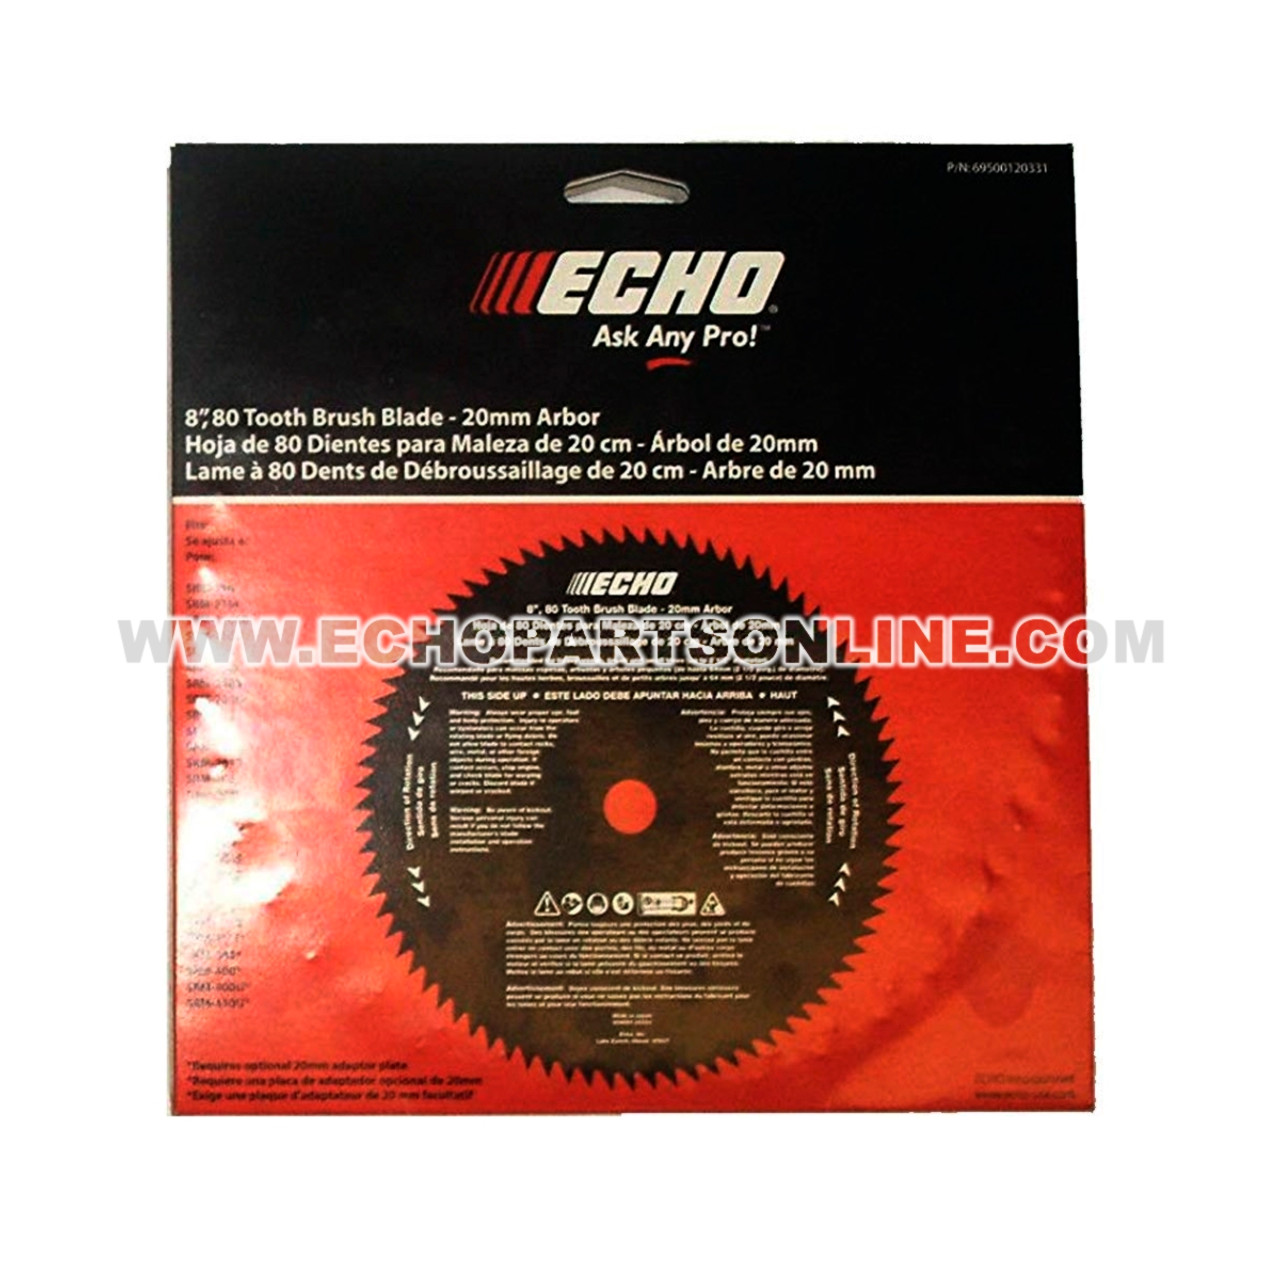 echo brush cutter blade conversion kit